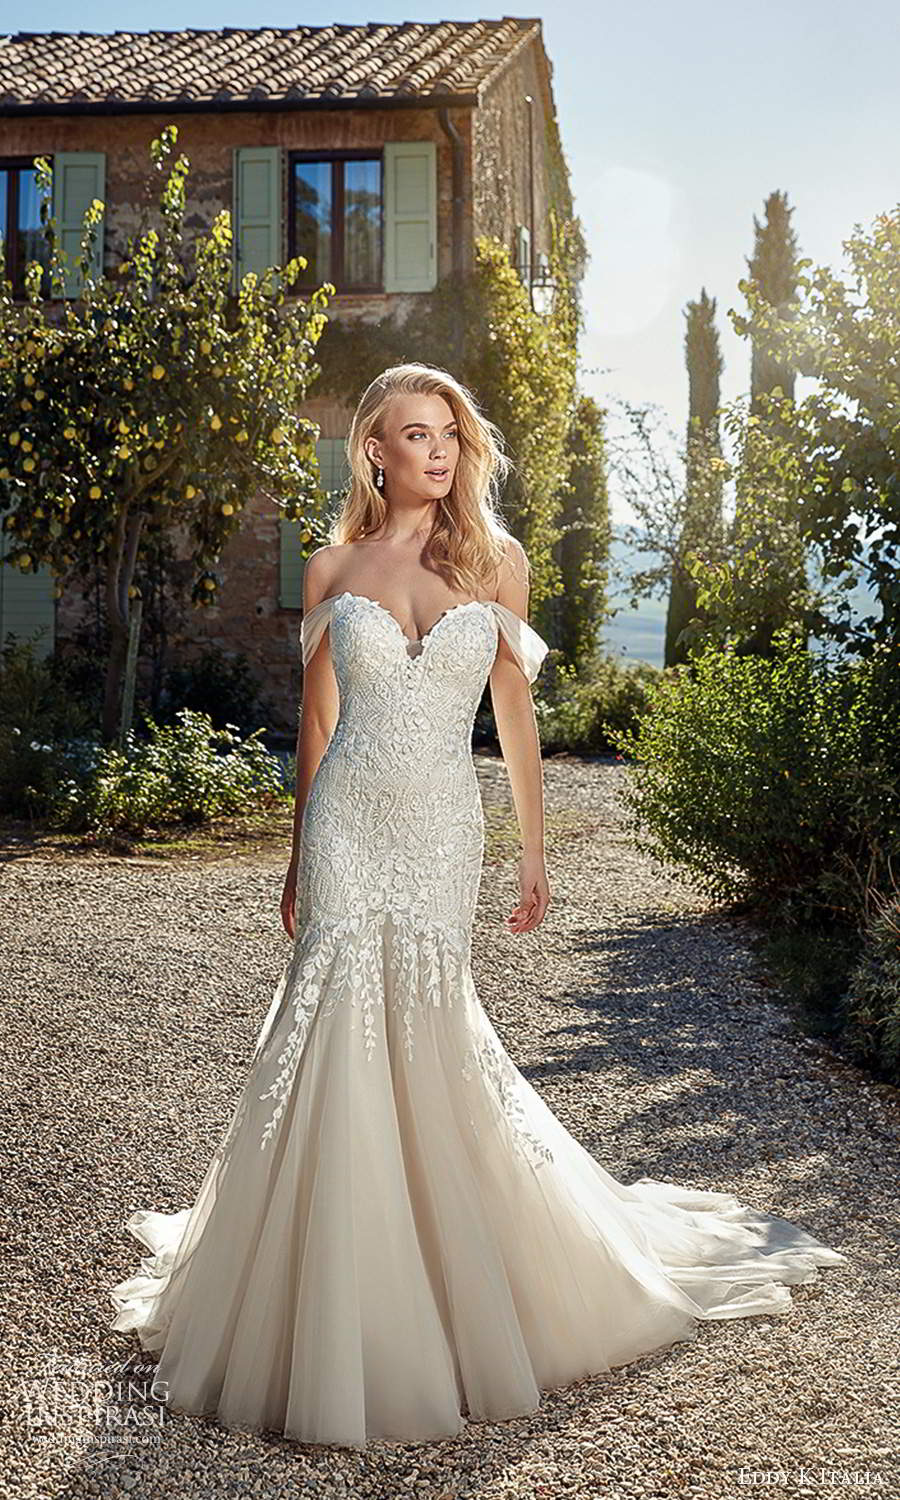 eddy k 2021 italia bridal off shoulder straps sweetheart neckline fully embellished fit flare mermaid wedding dress chapel train (14) mv